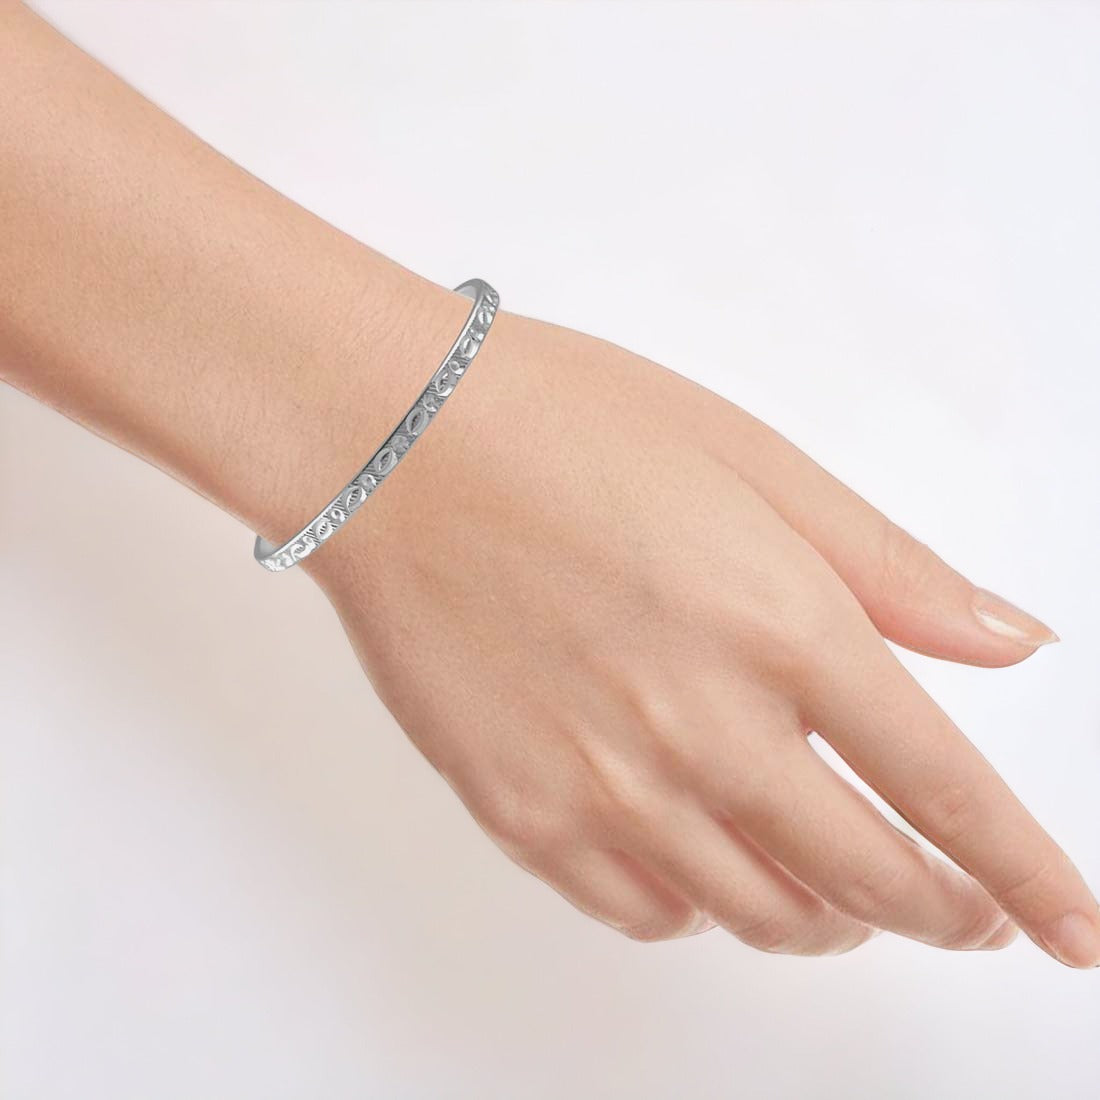 Silver Sleek Design Bangle Pair For Women & Girls